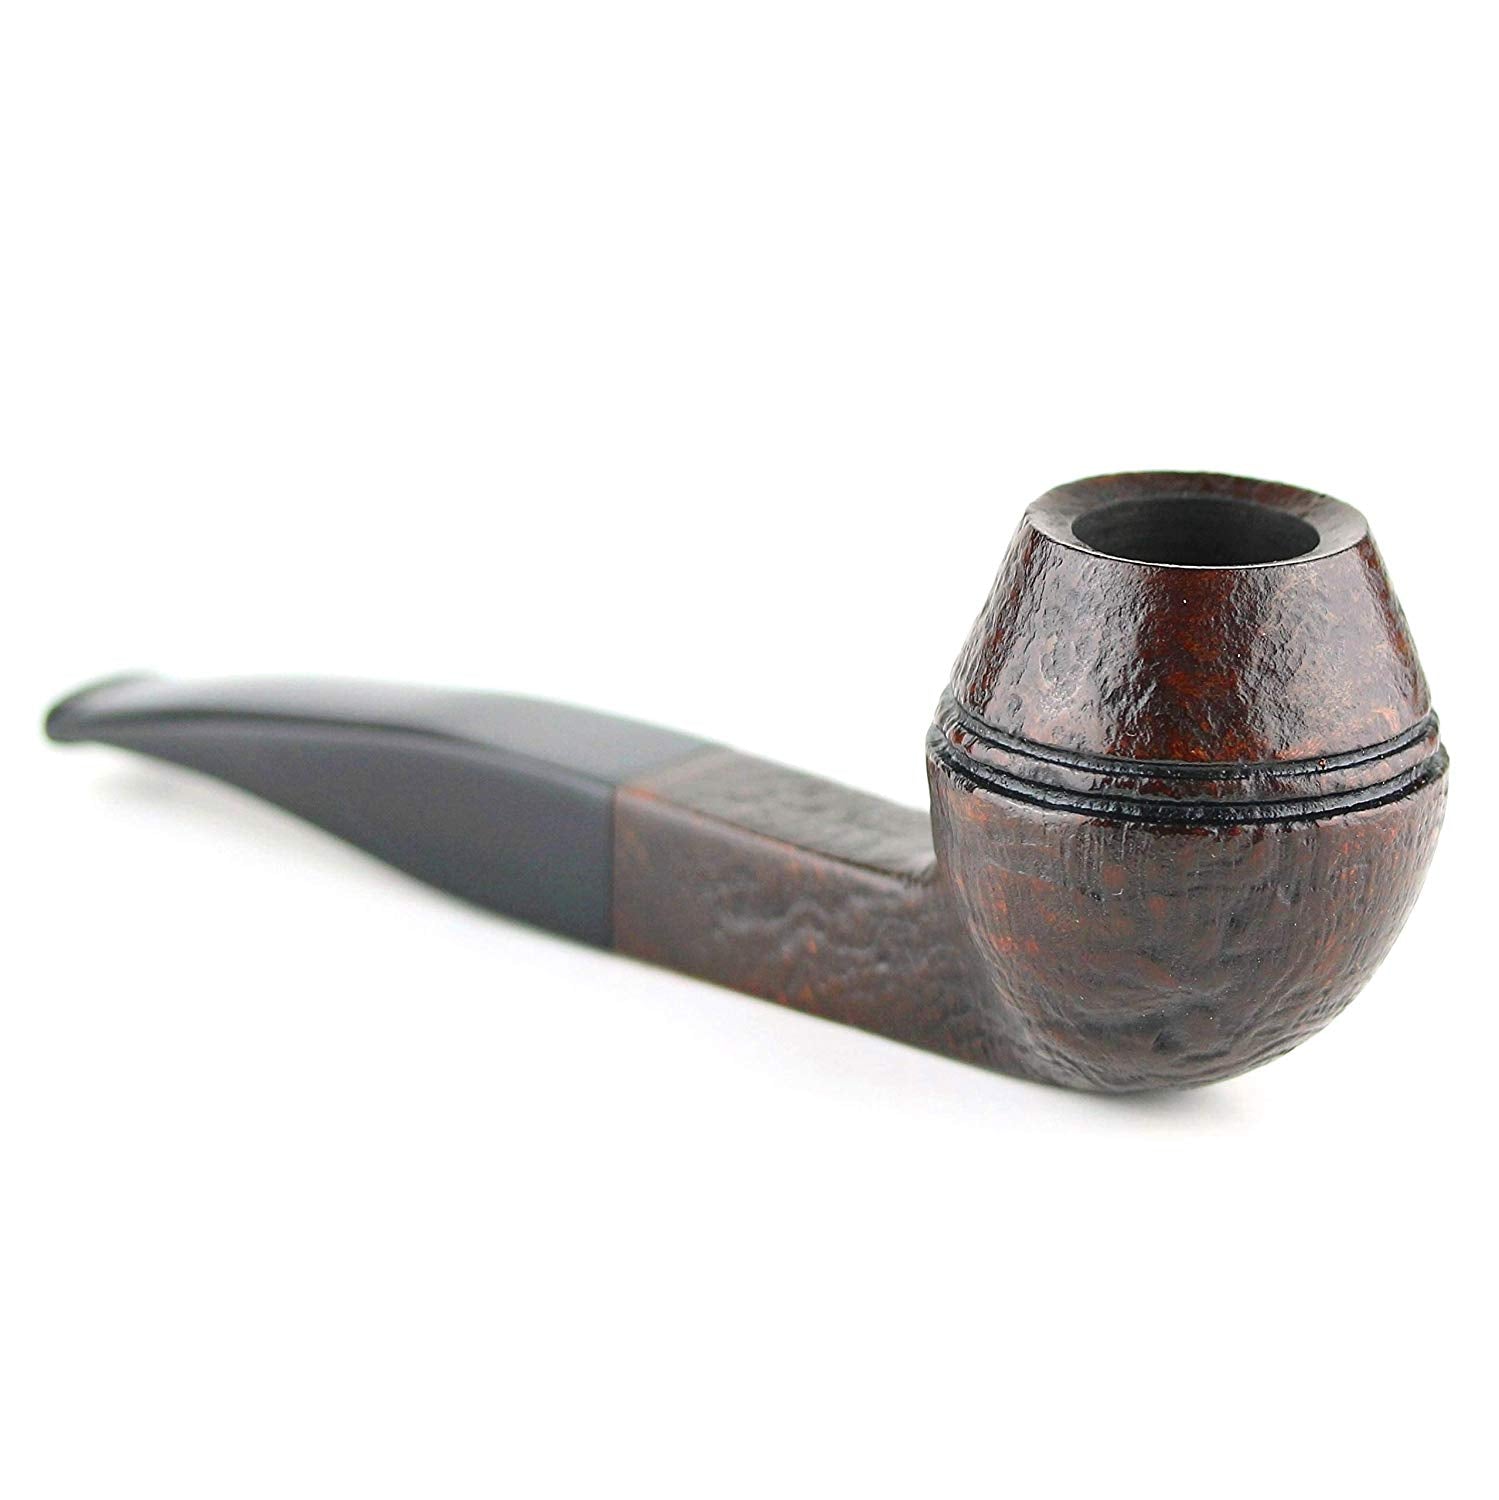 No. 171 Royal Mediterranean Briar Wood Tobacco Pipe